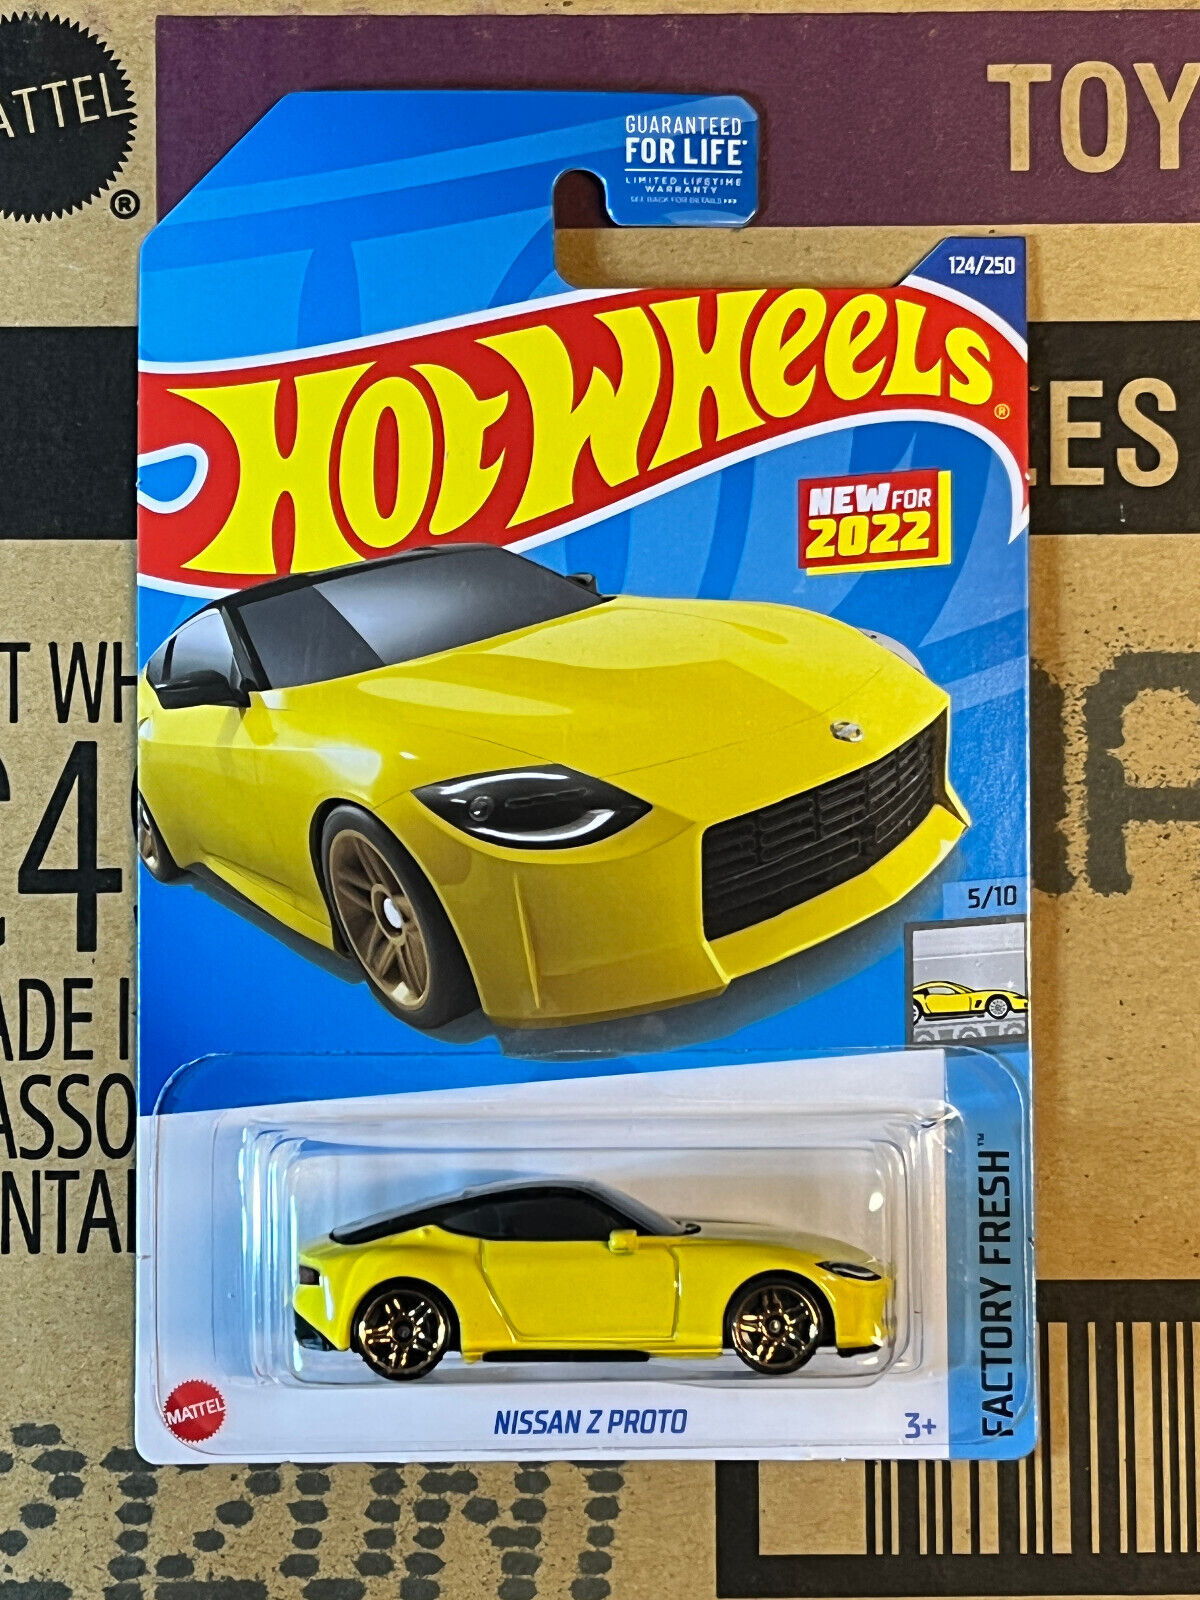 2022 Hot Wheels Factory Fresh #5/10 Nissan Z Proto Yellow NIP